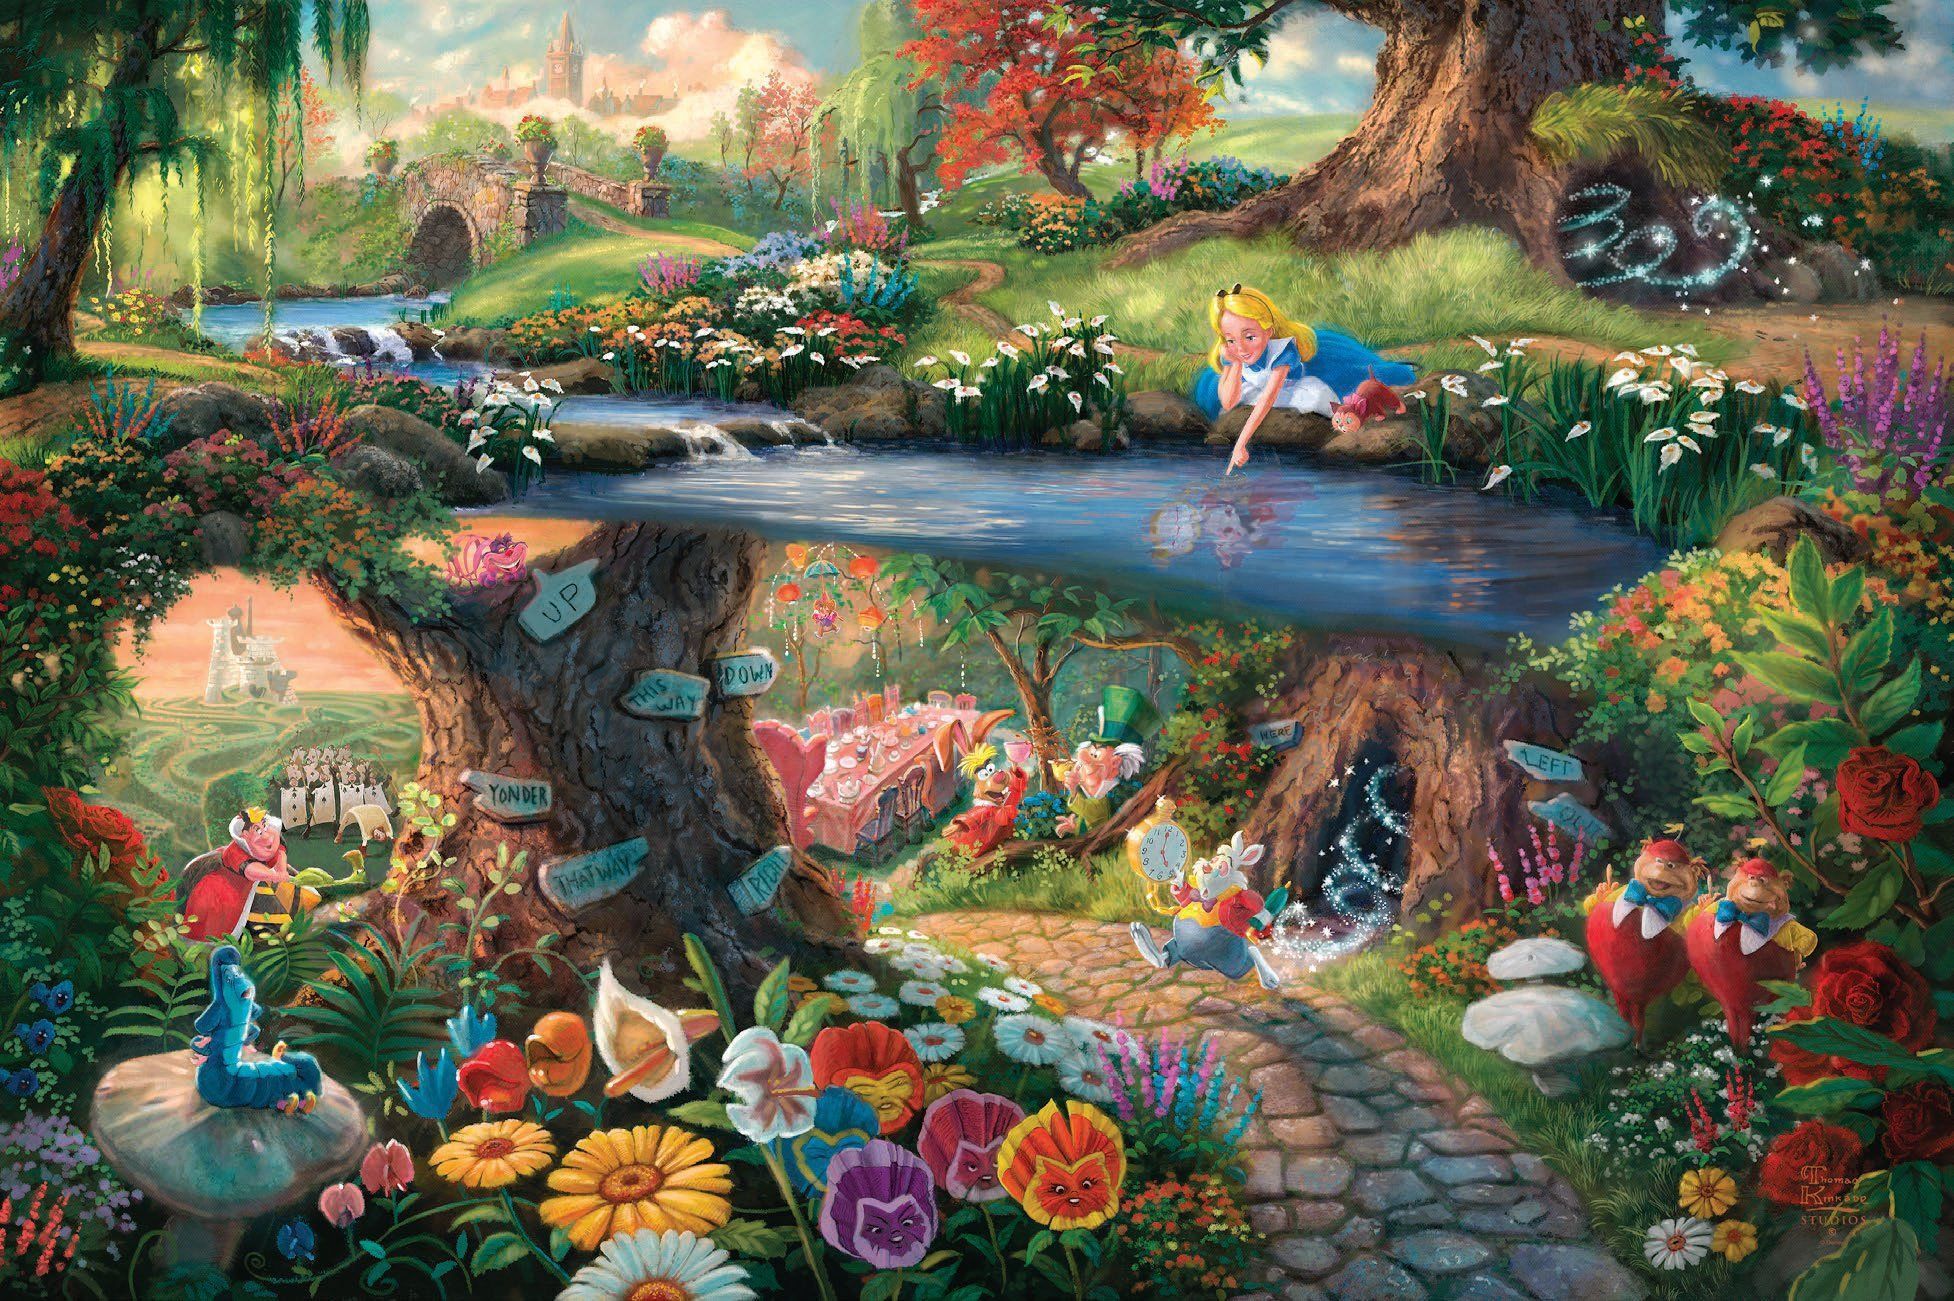 Alice in Wonderland Wallpaper Free Alice in Wonderland Background